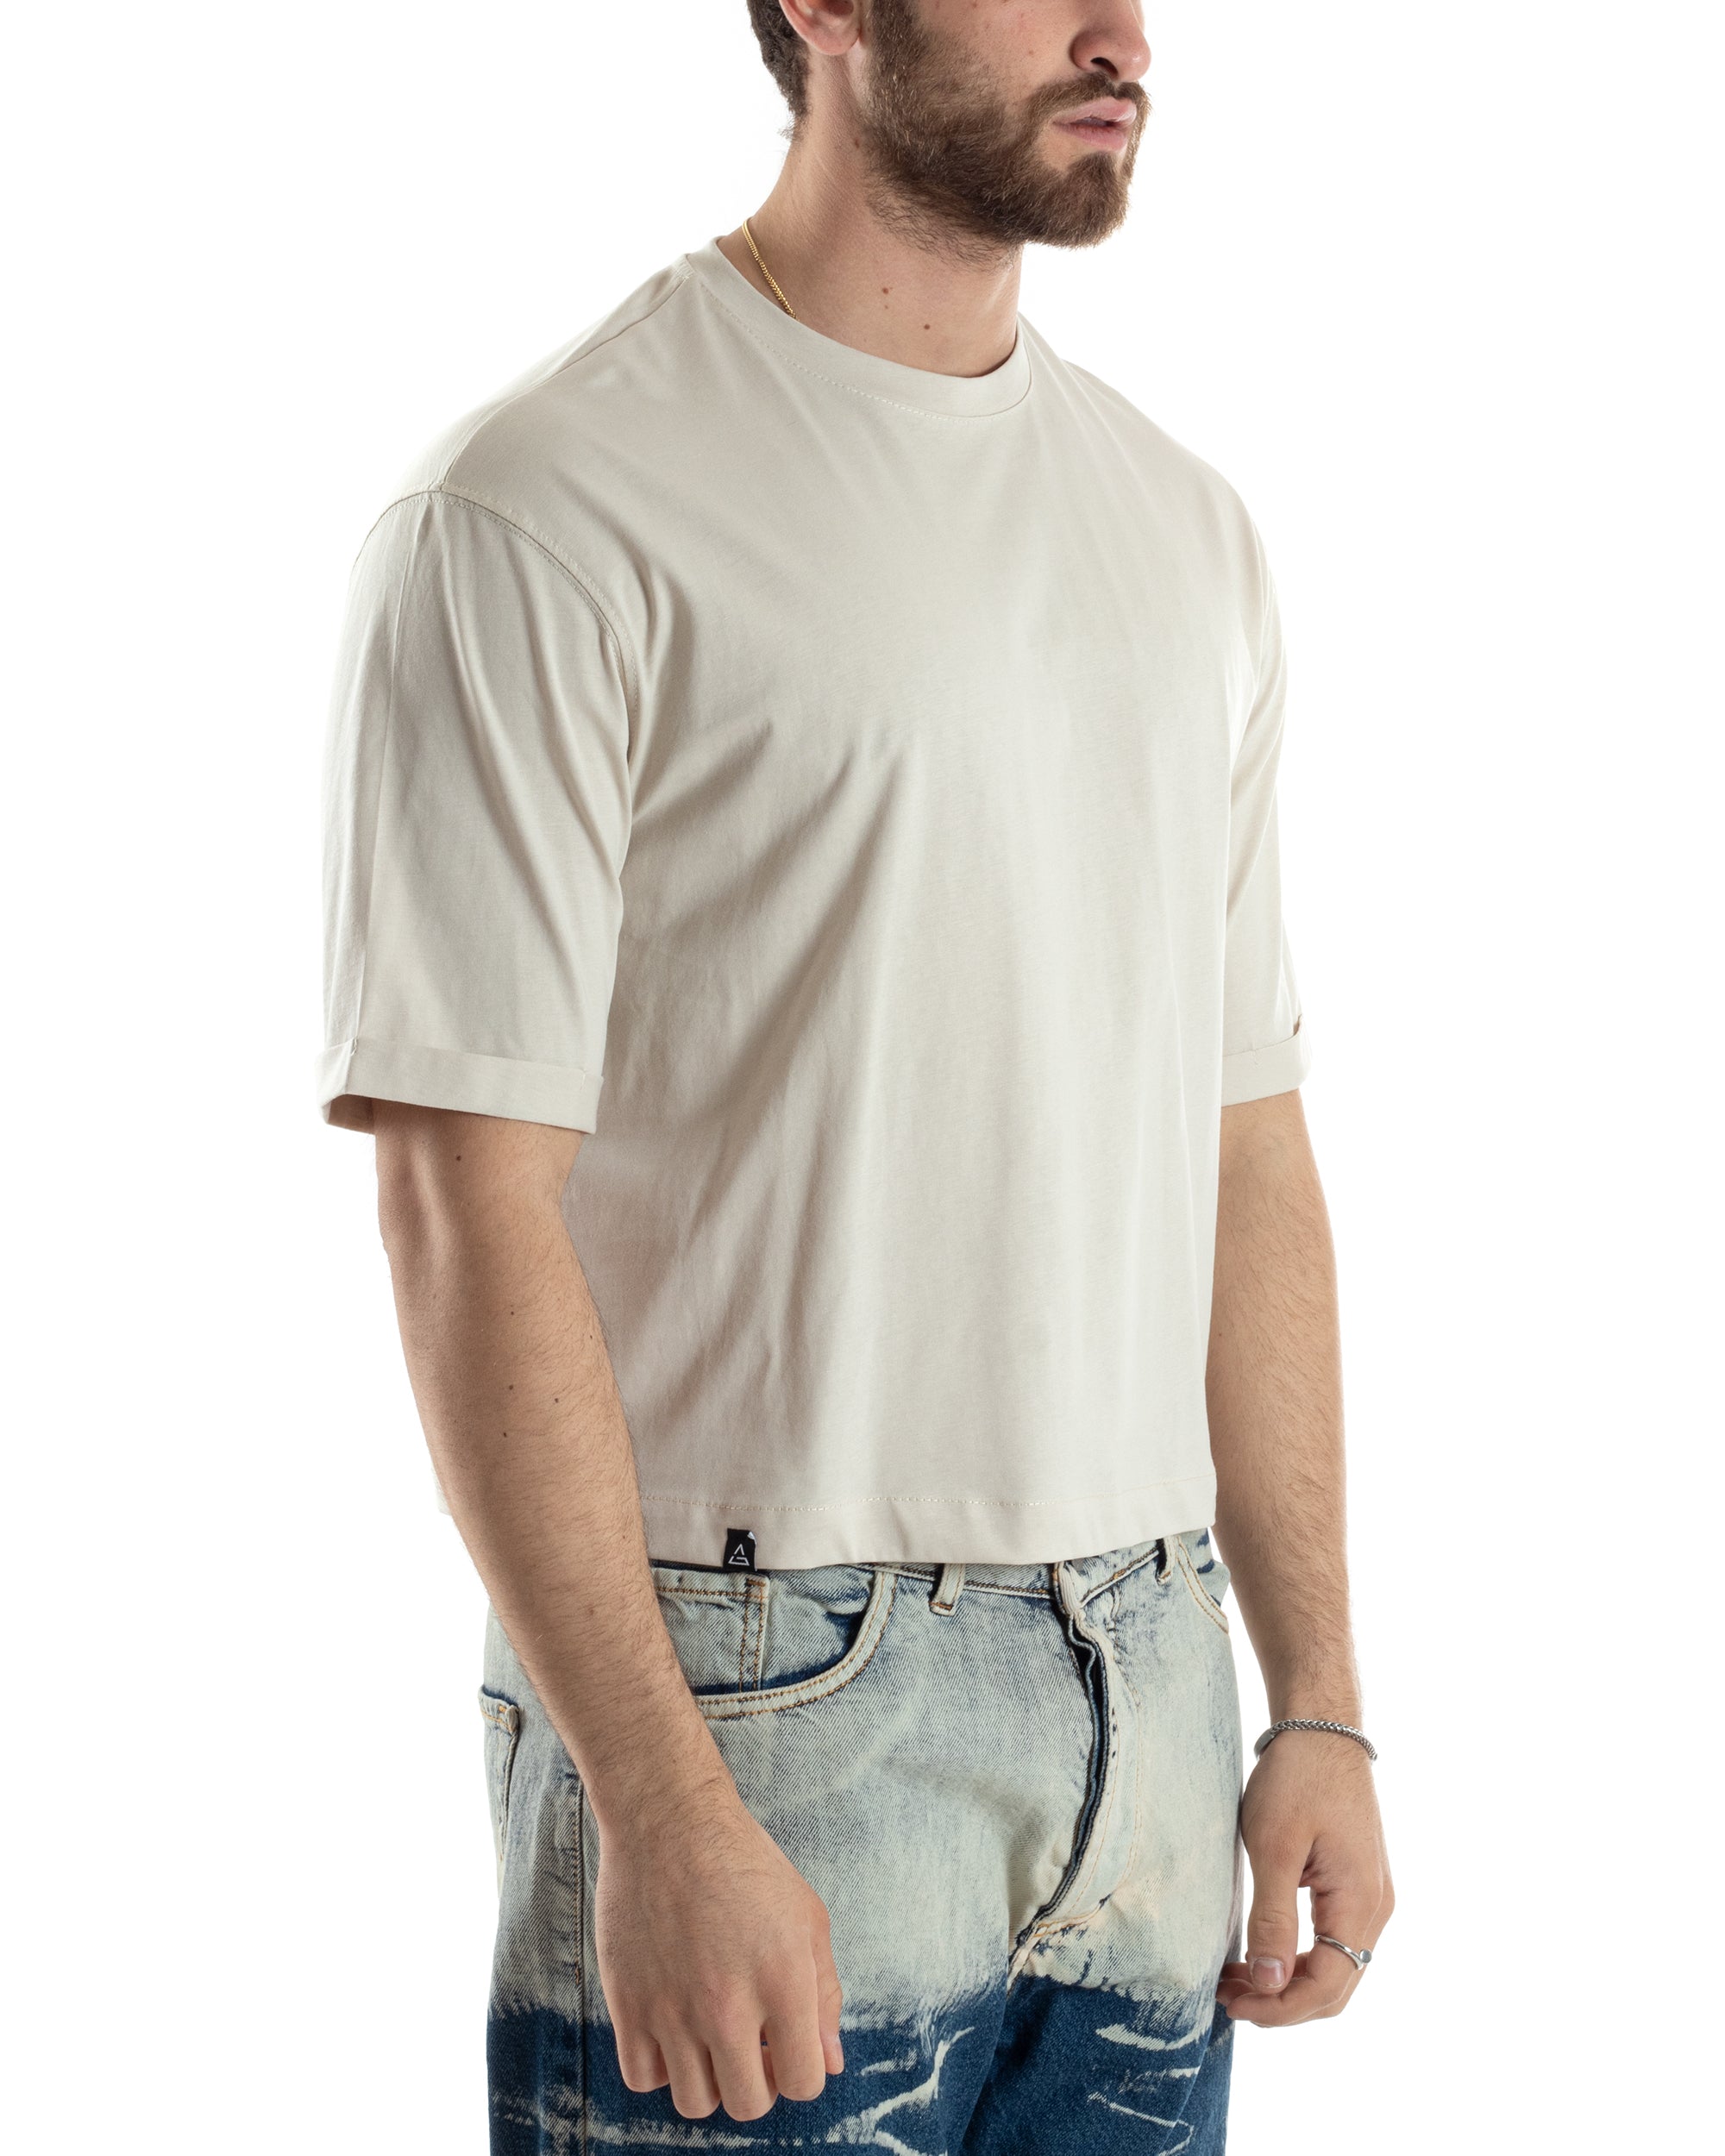 T-shirt Uomo Cropped Corta Boxy Fit Tinta Unita Beige Casual GIOSAL-TS3011A